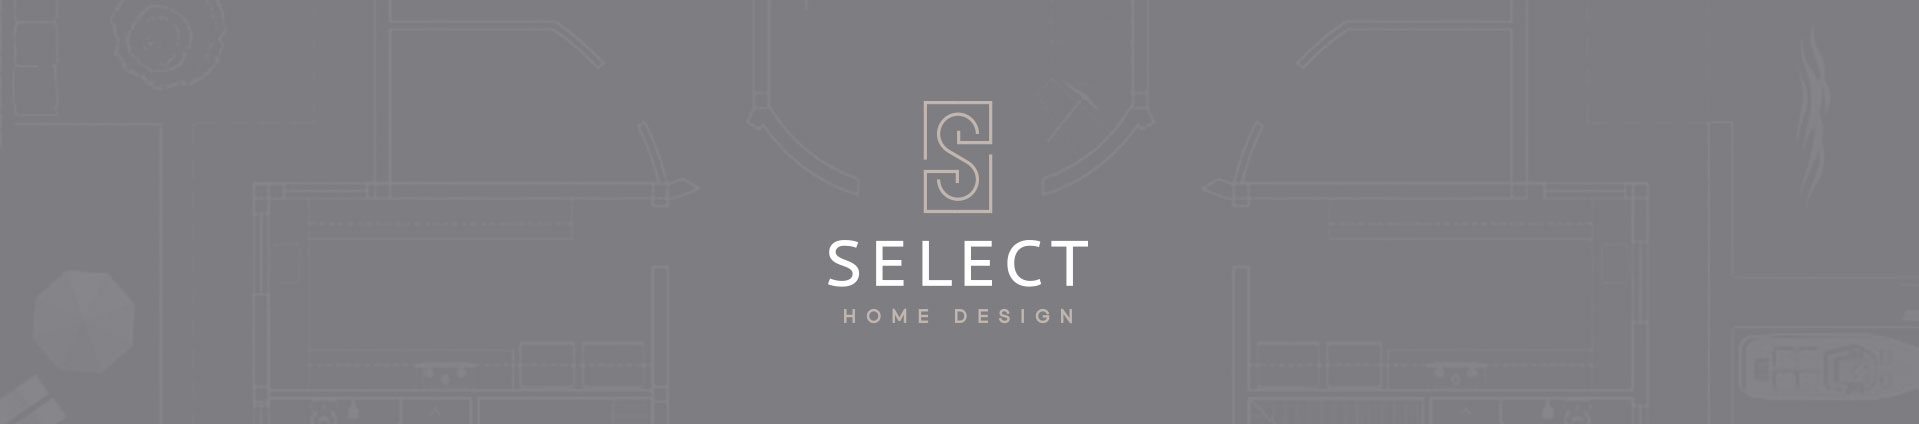 Select - Home Design